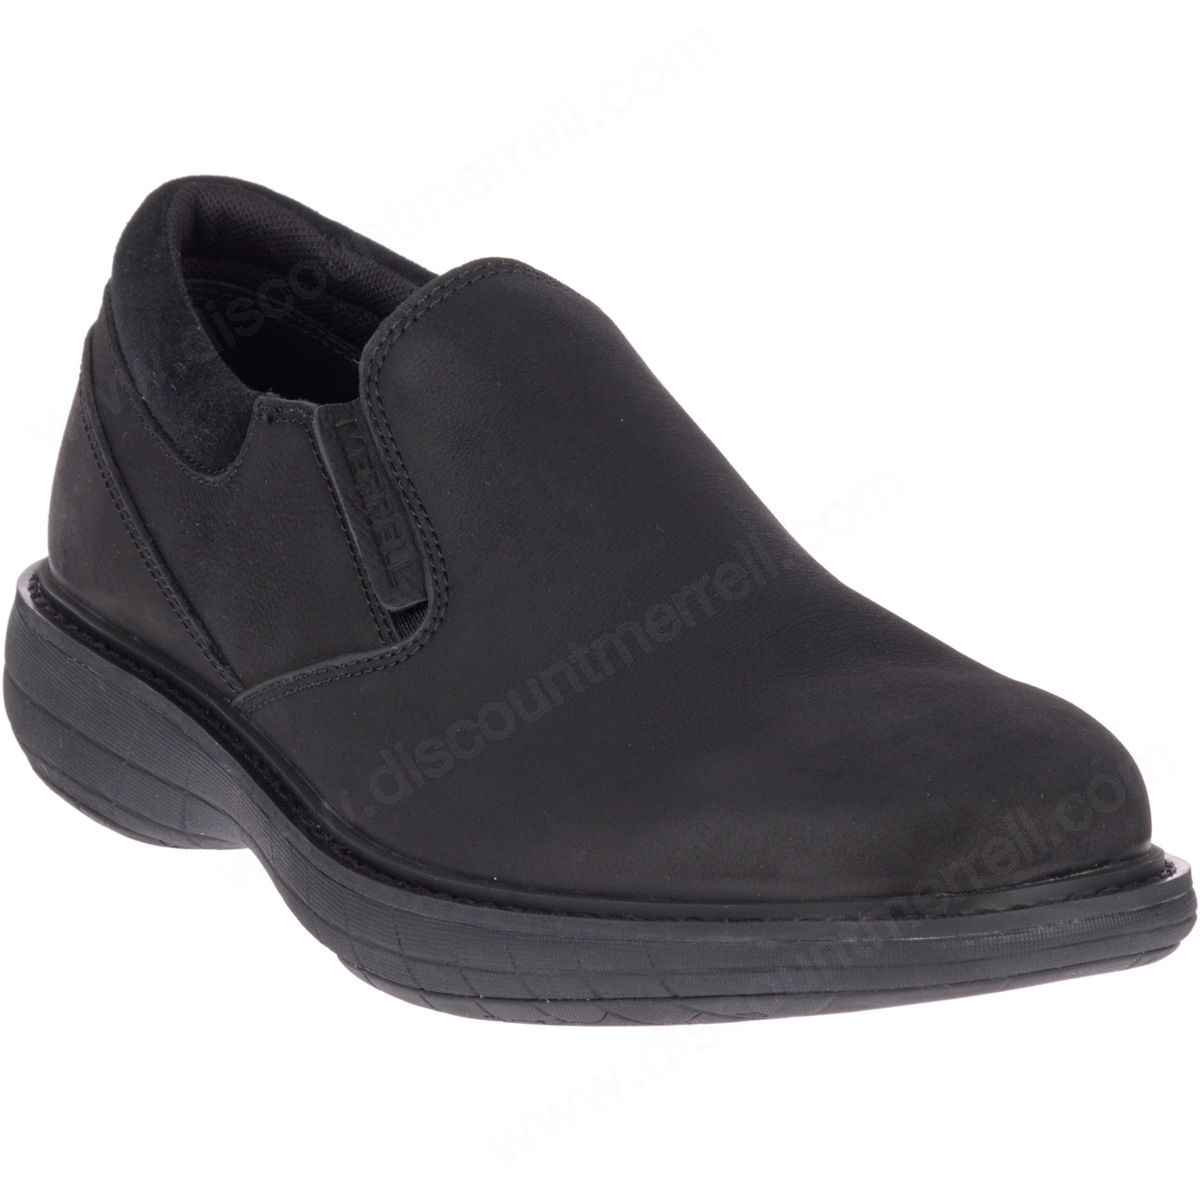 Mens Merrell World Vue Venetian Moc Toe Black Suede Full Grain Leather Shoes New 